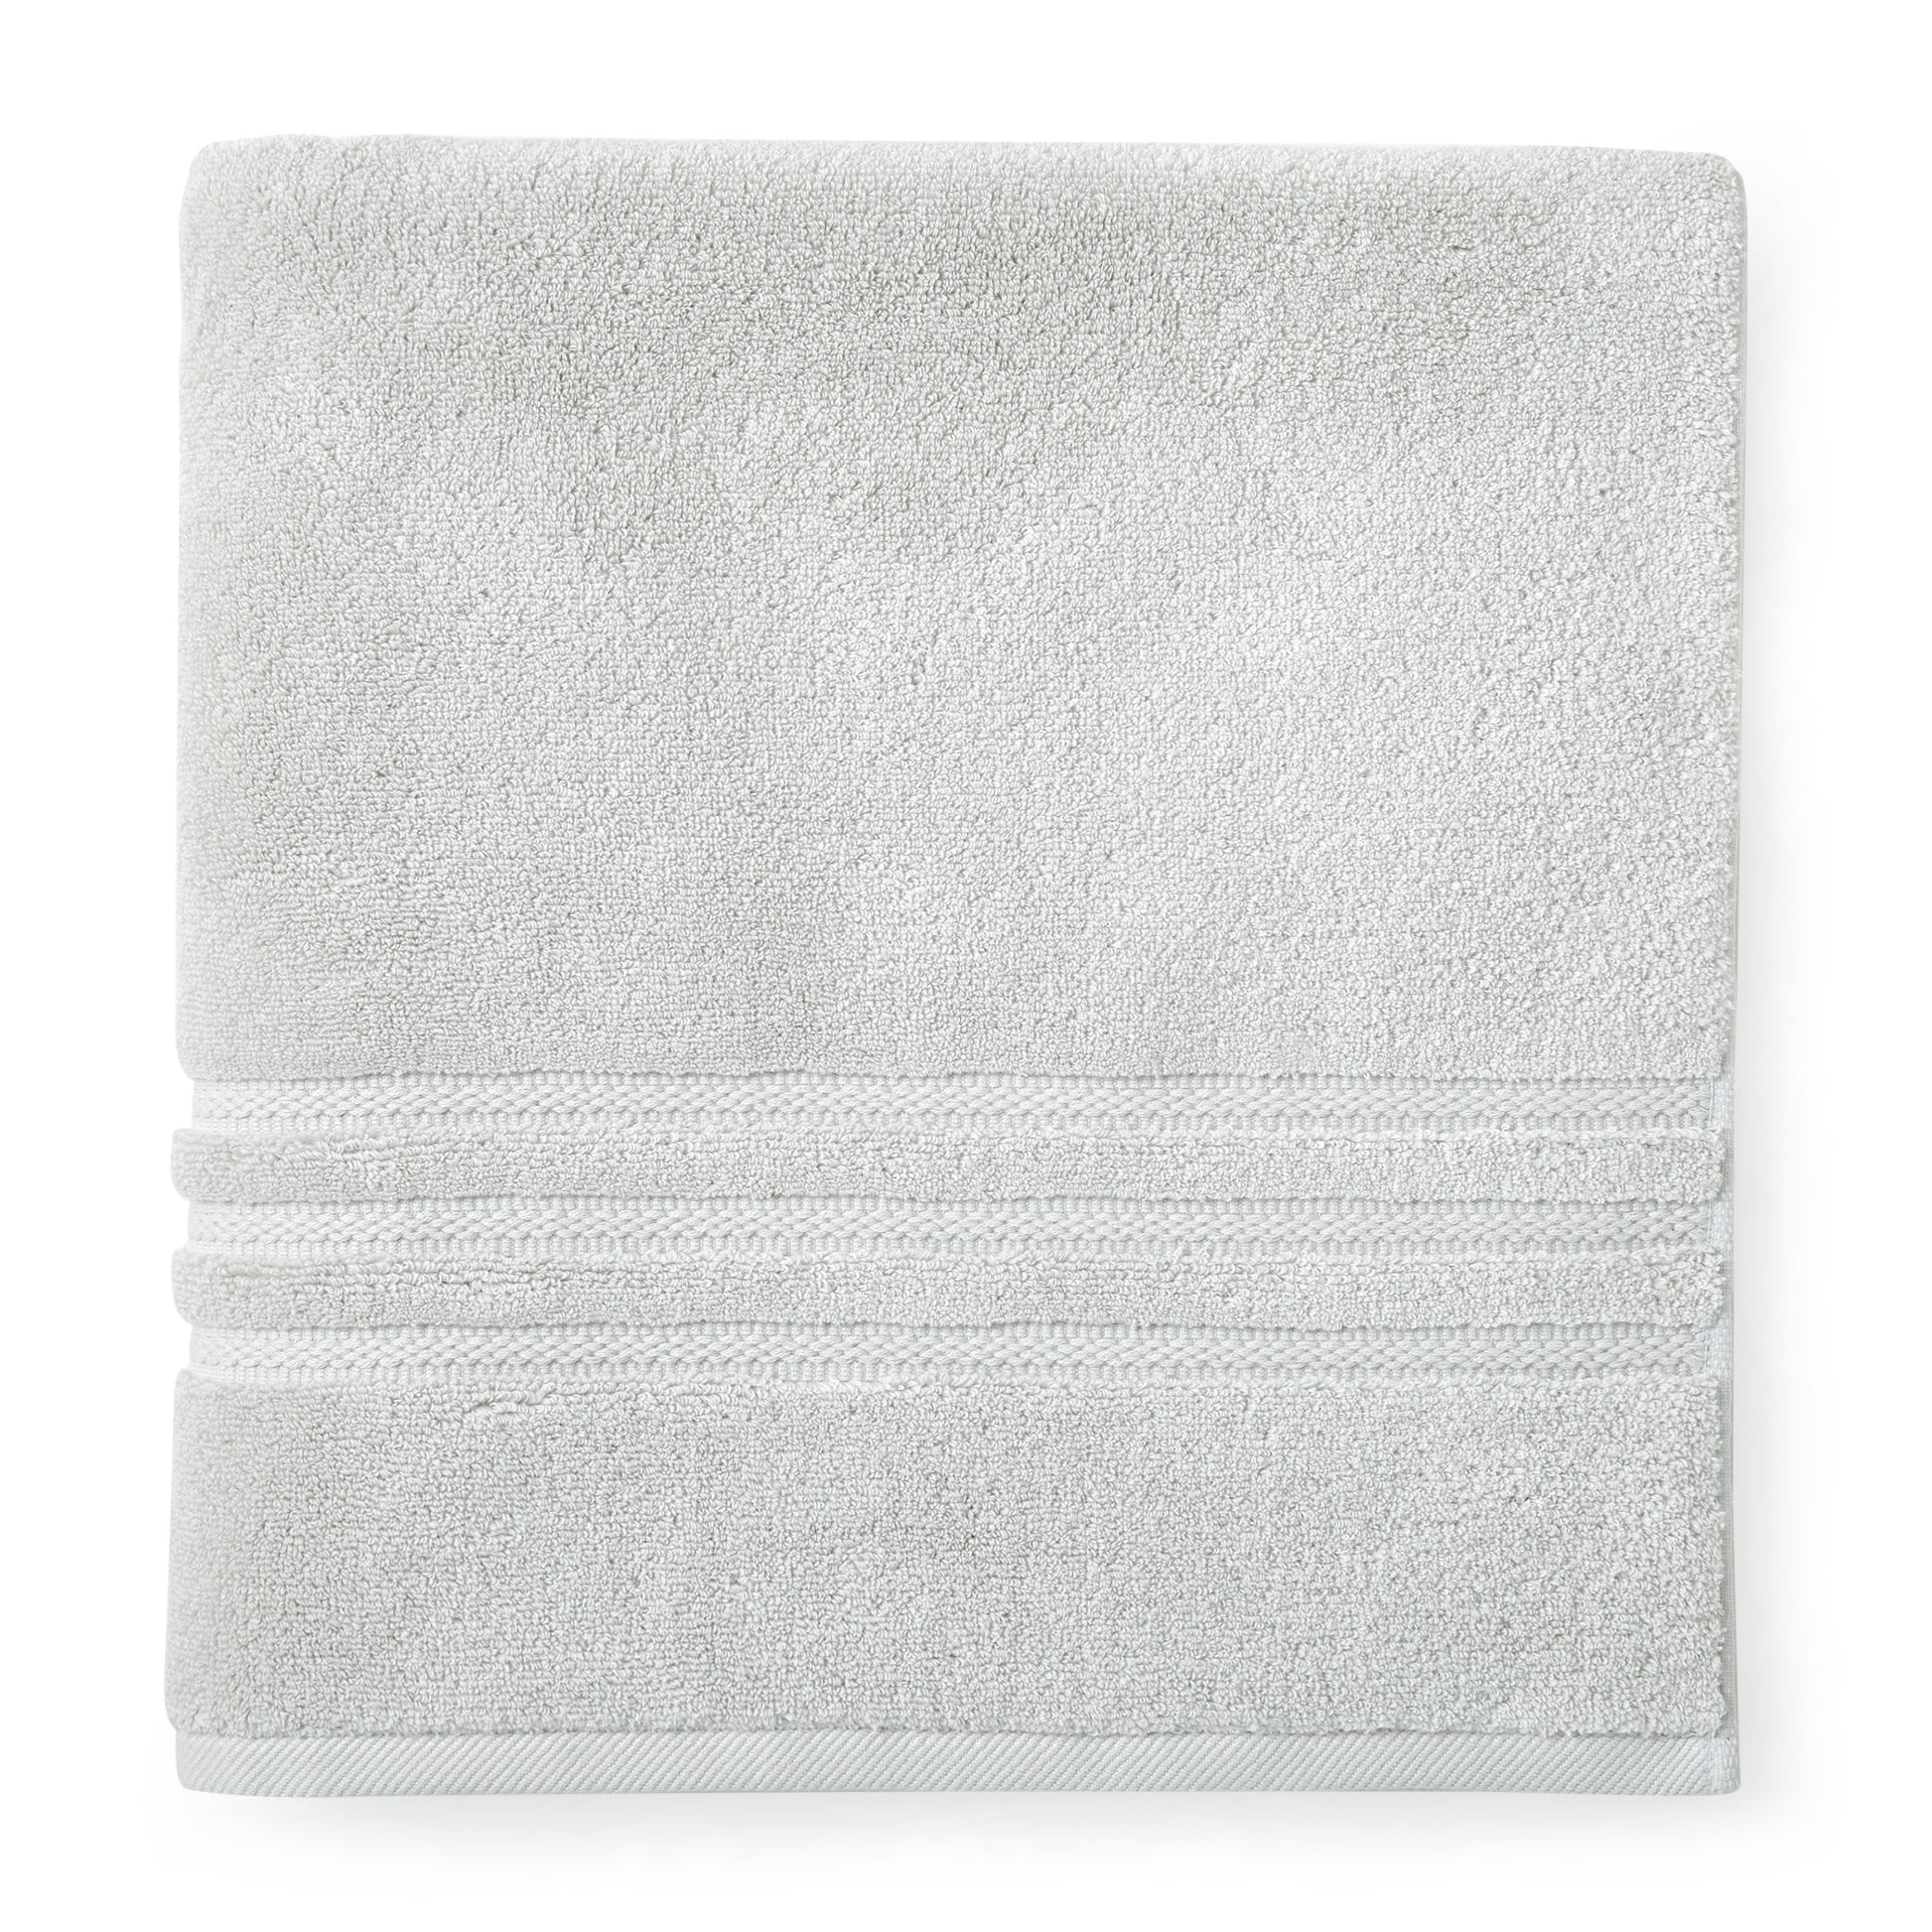 DKNY Ludlow Towels